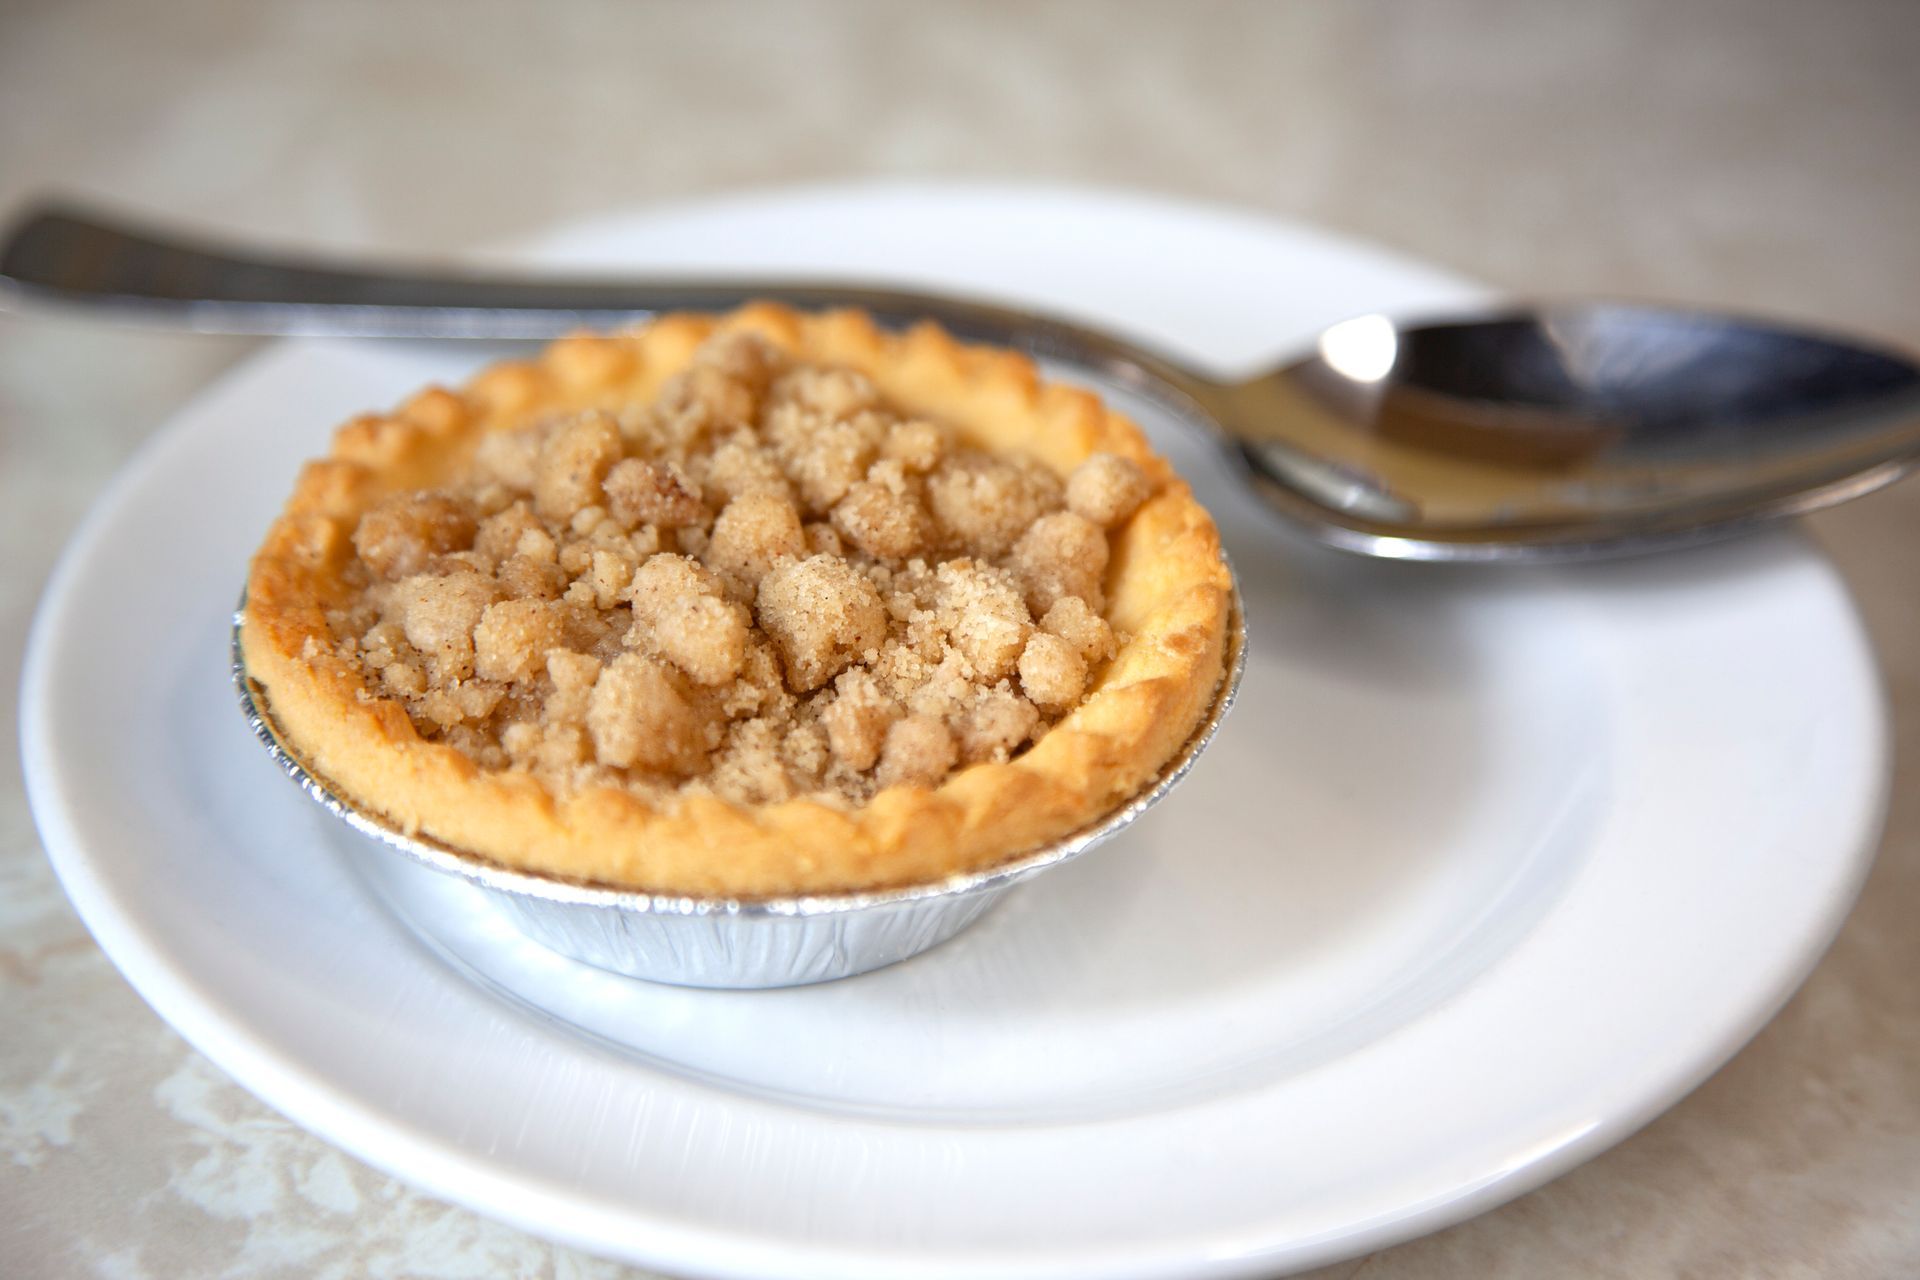 The mini World Famous Apple Cobbler Pie by Esco Eats. A destination dessert in Atlanta